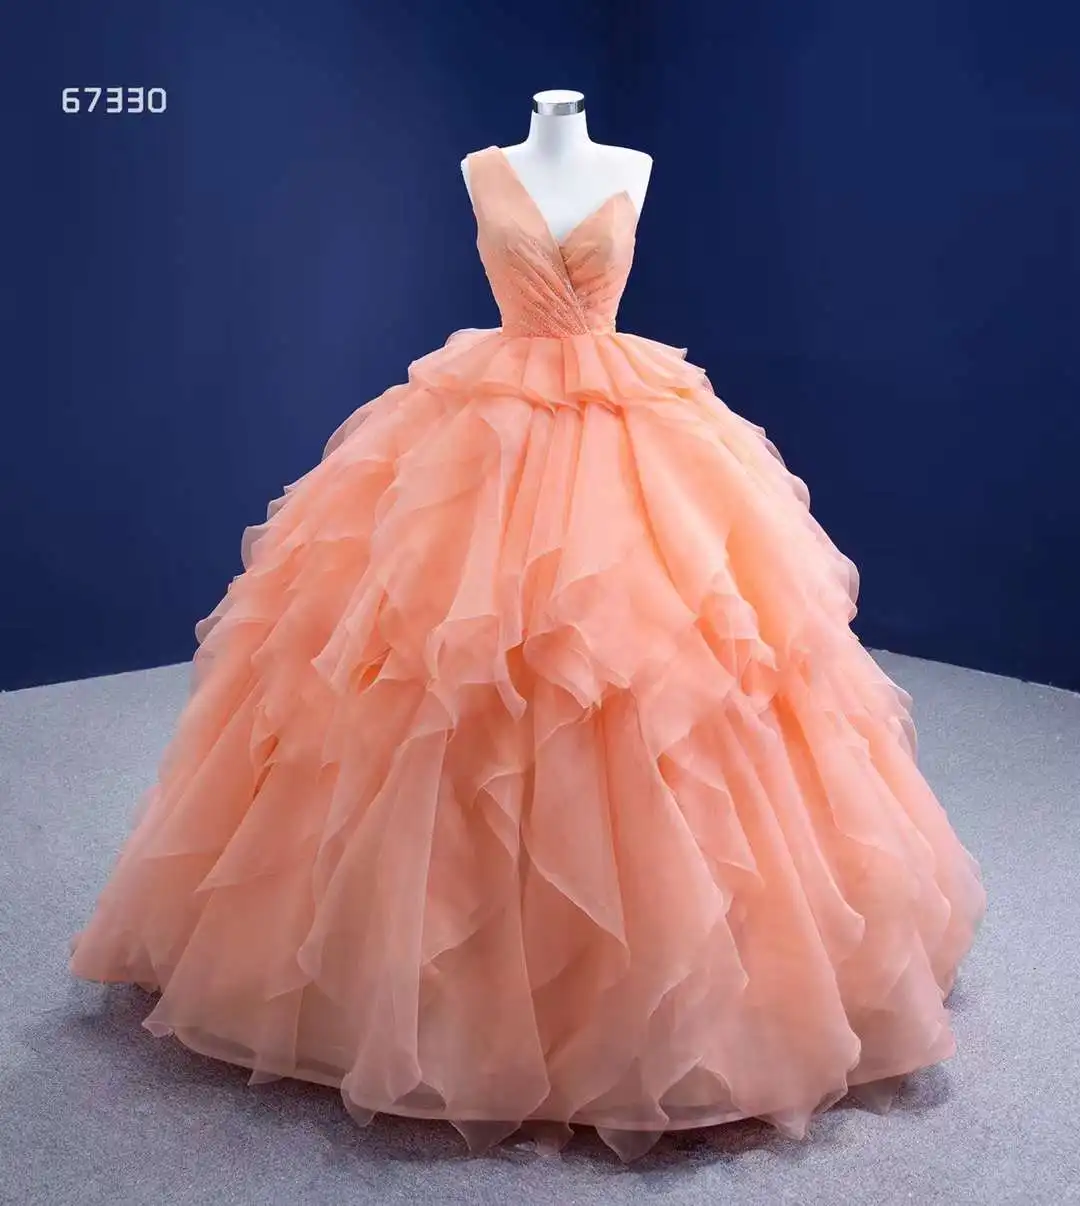 

Aoliweiya Bridal #67330 Ball Gown Party Evening Dress